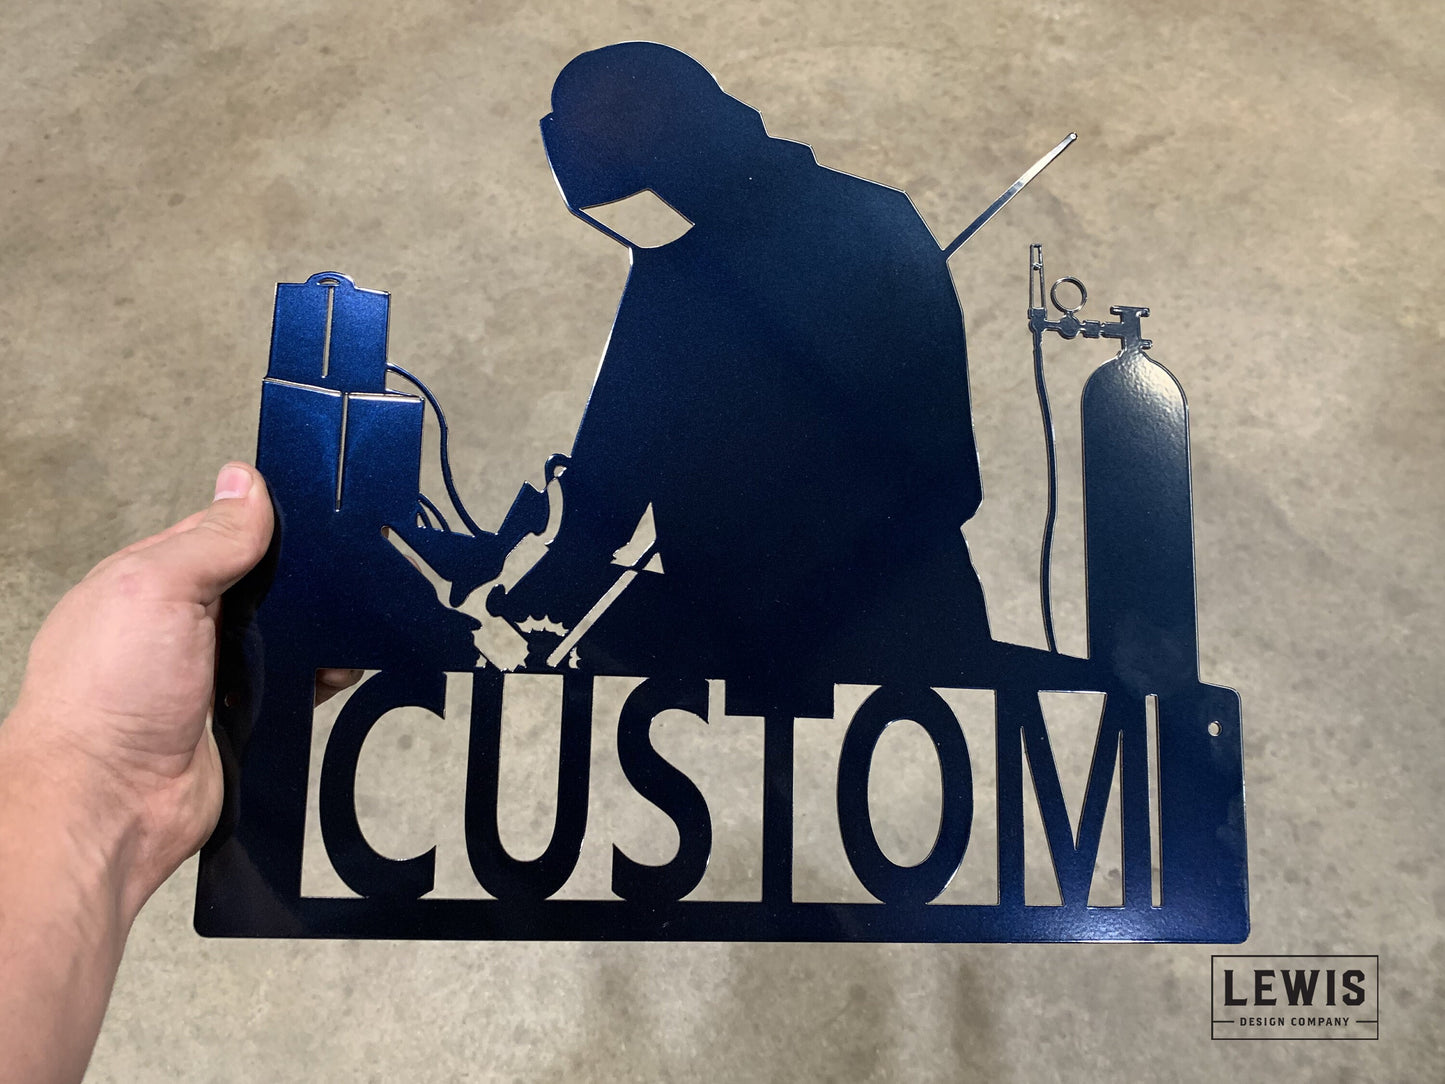 Fabrication/Welding Custom Name Metal Sign - Garage Decor, Shop Decor, Welding, Fabrication, Metal Sign, Welding Gift, Metalworking